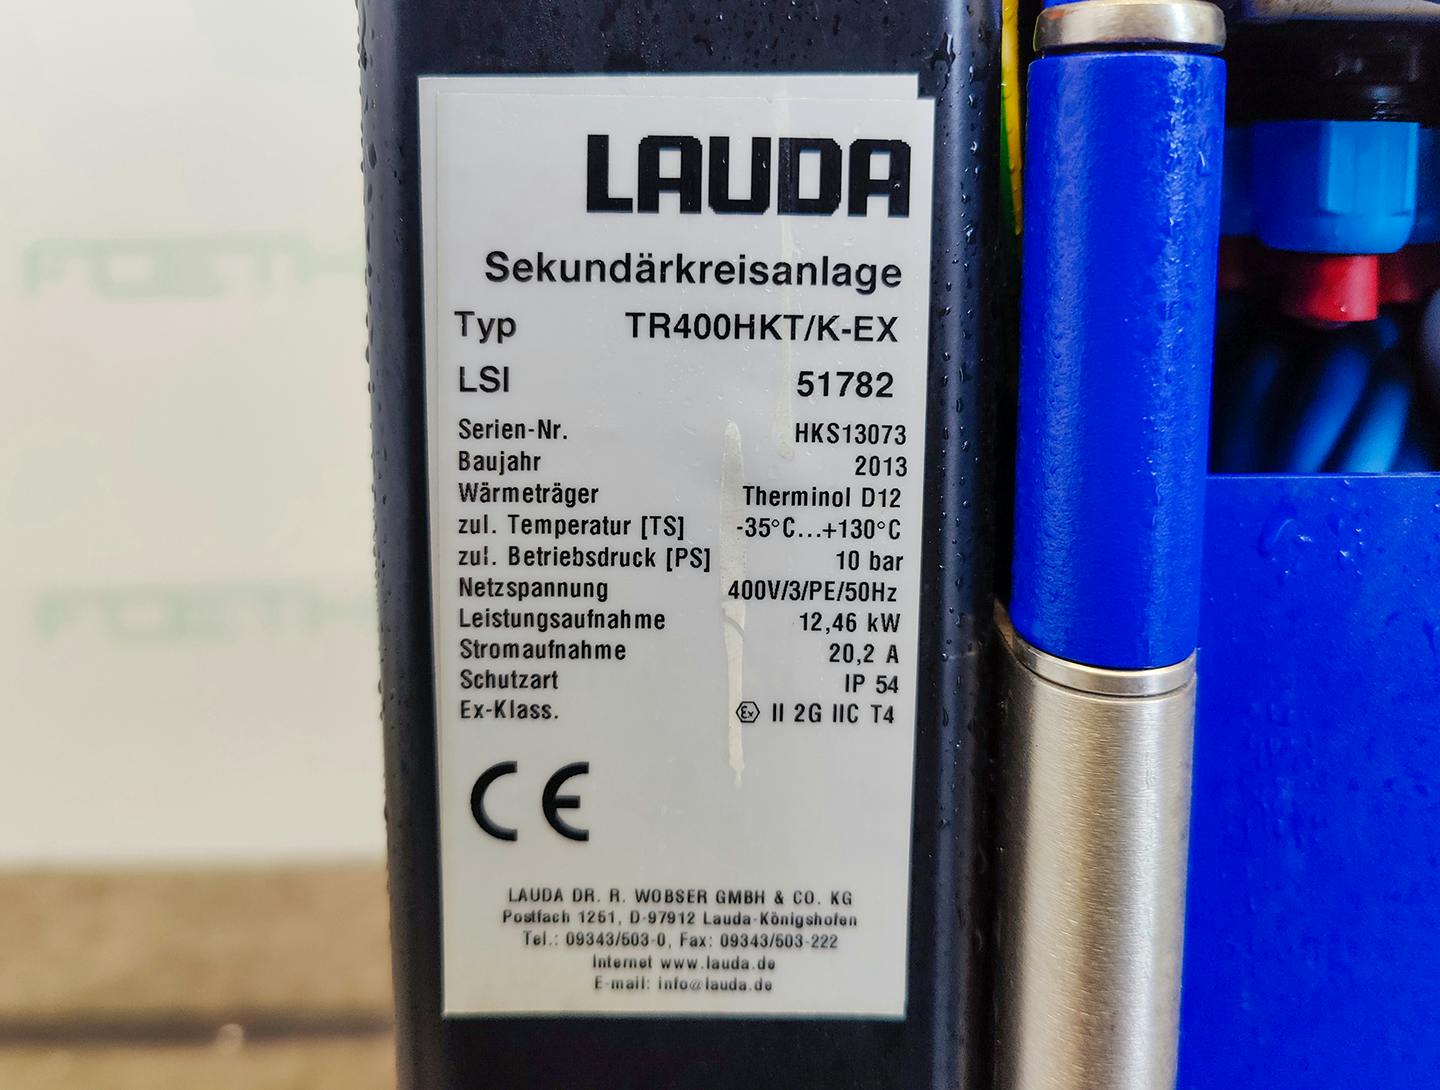 Lauda TR400 HKT/K-EX "secondary circuit system" - Atemperador - image 6